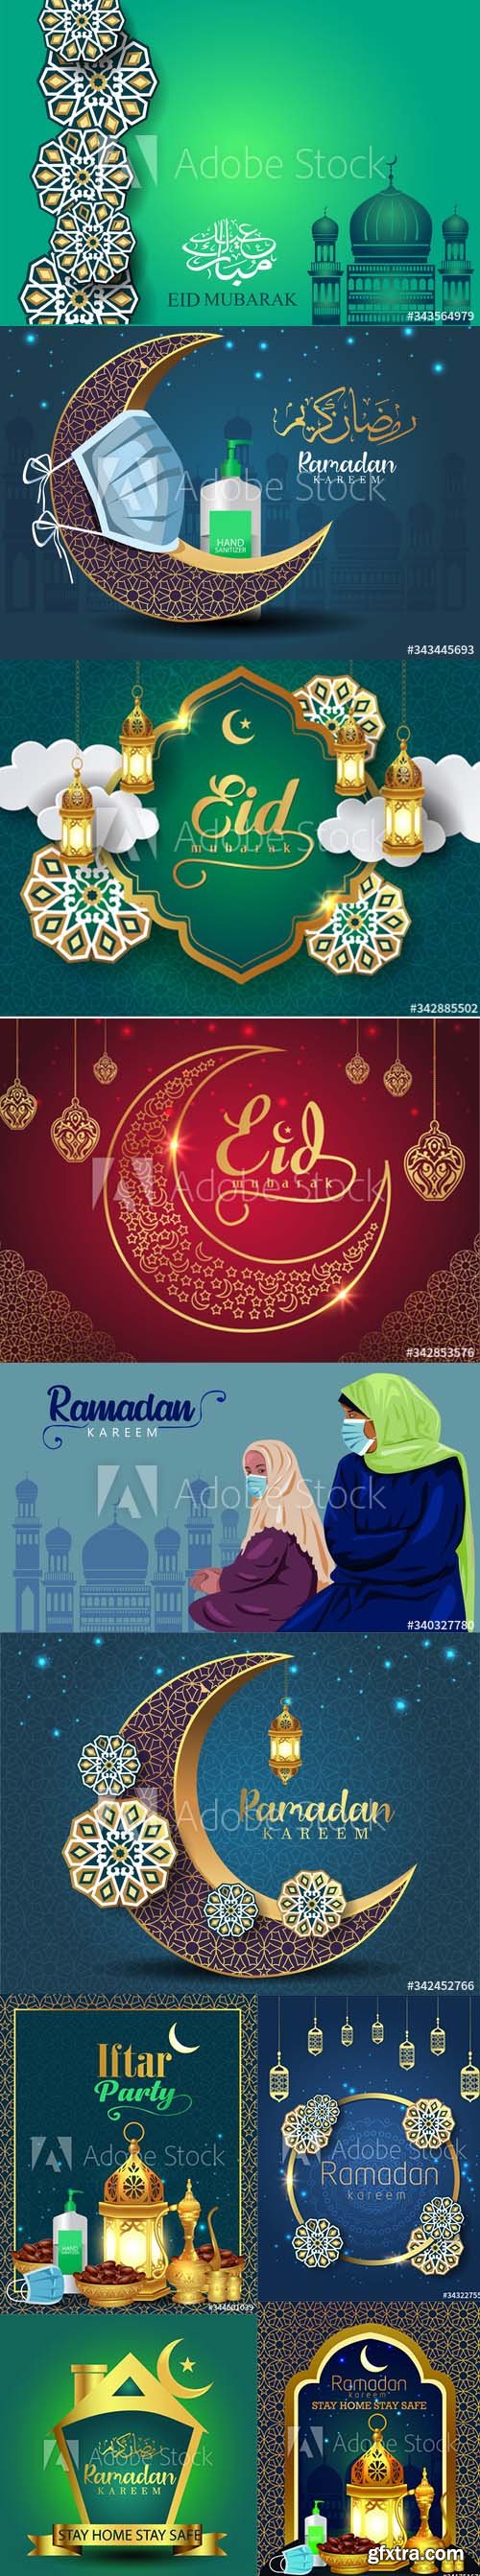 Ramadan Kareem vector illustration. Corona virus concept